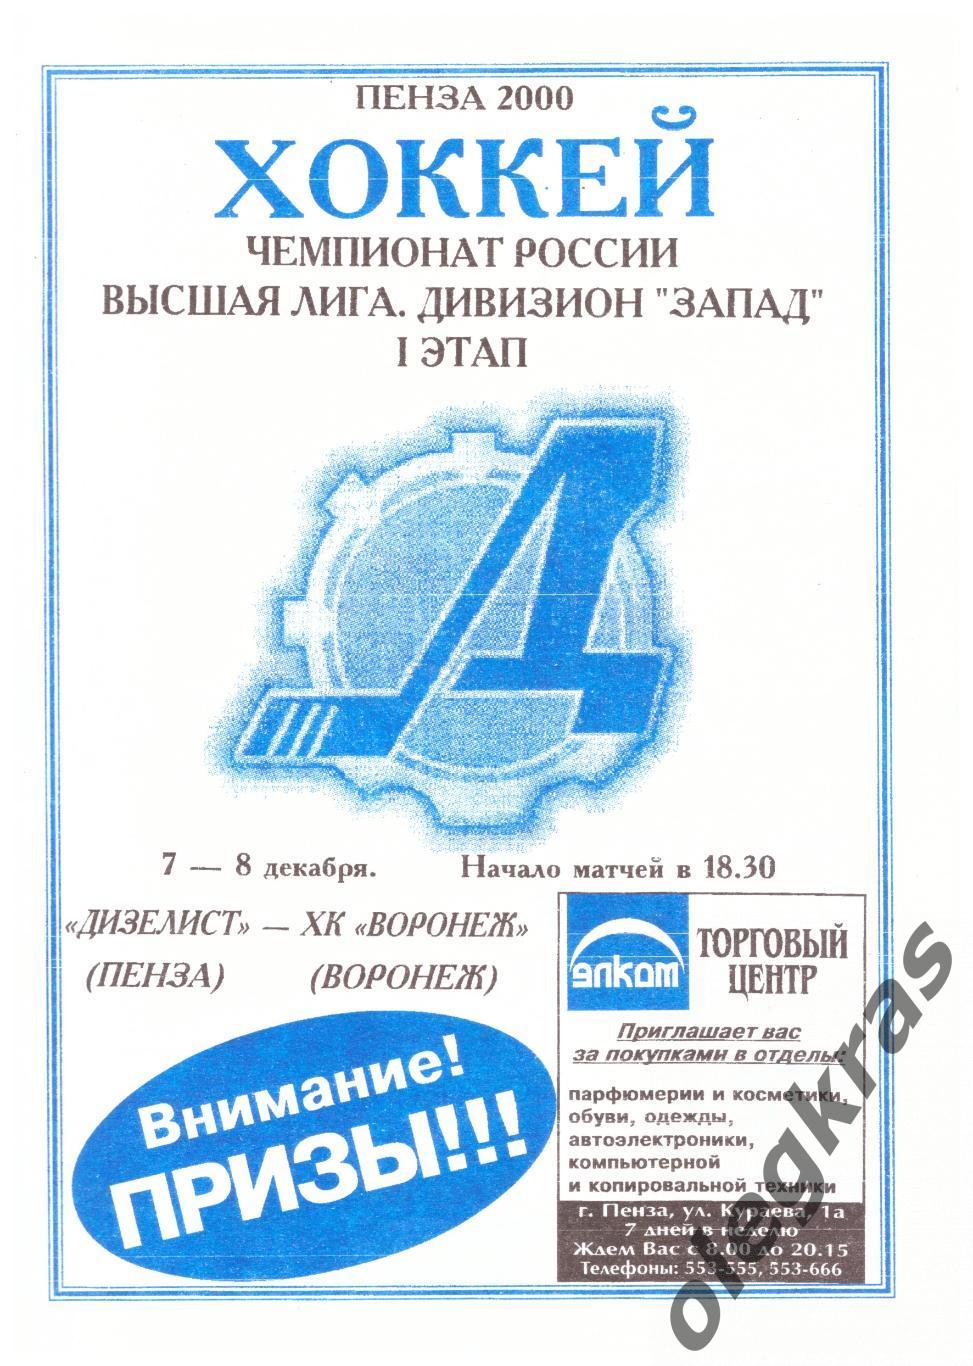 Дизелист(Пенза) - ХК Воронеж(Воронеж) - 7-8 декабря 2000 года.